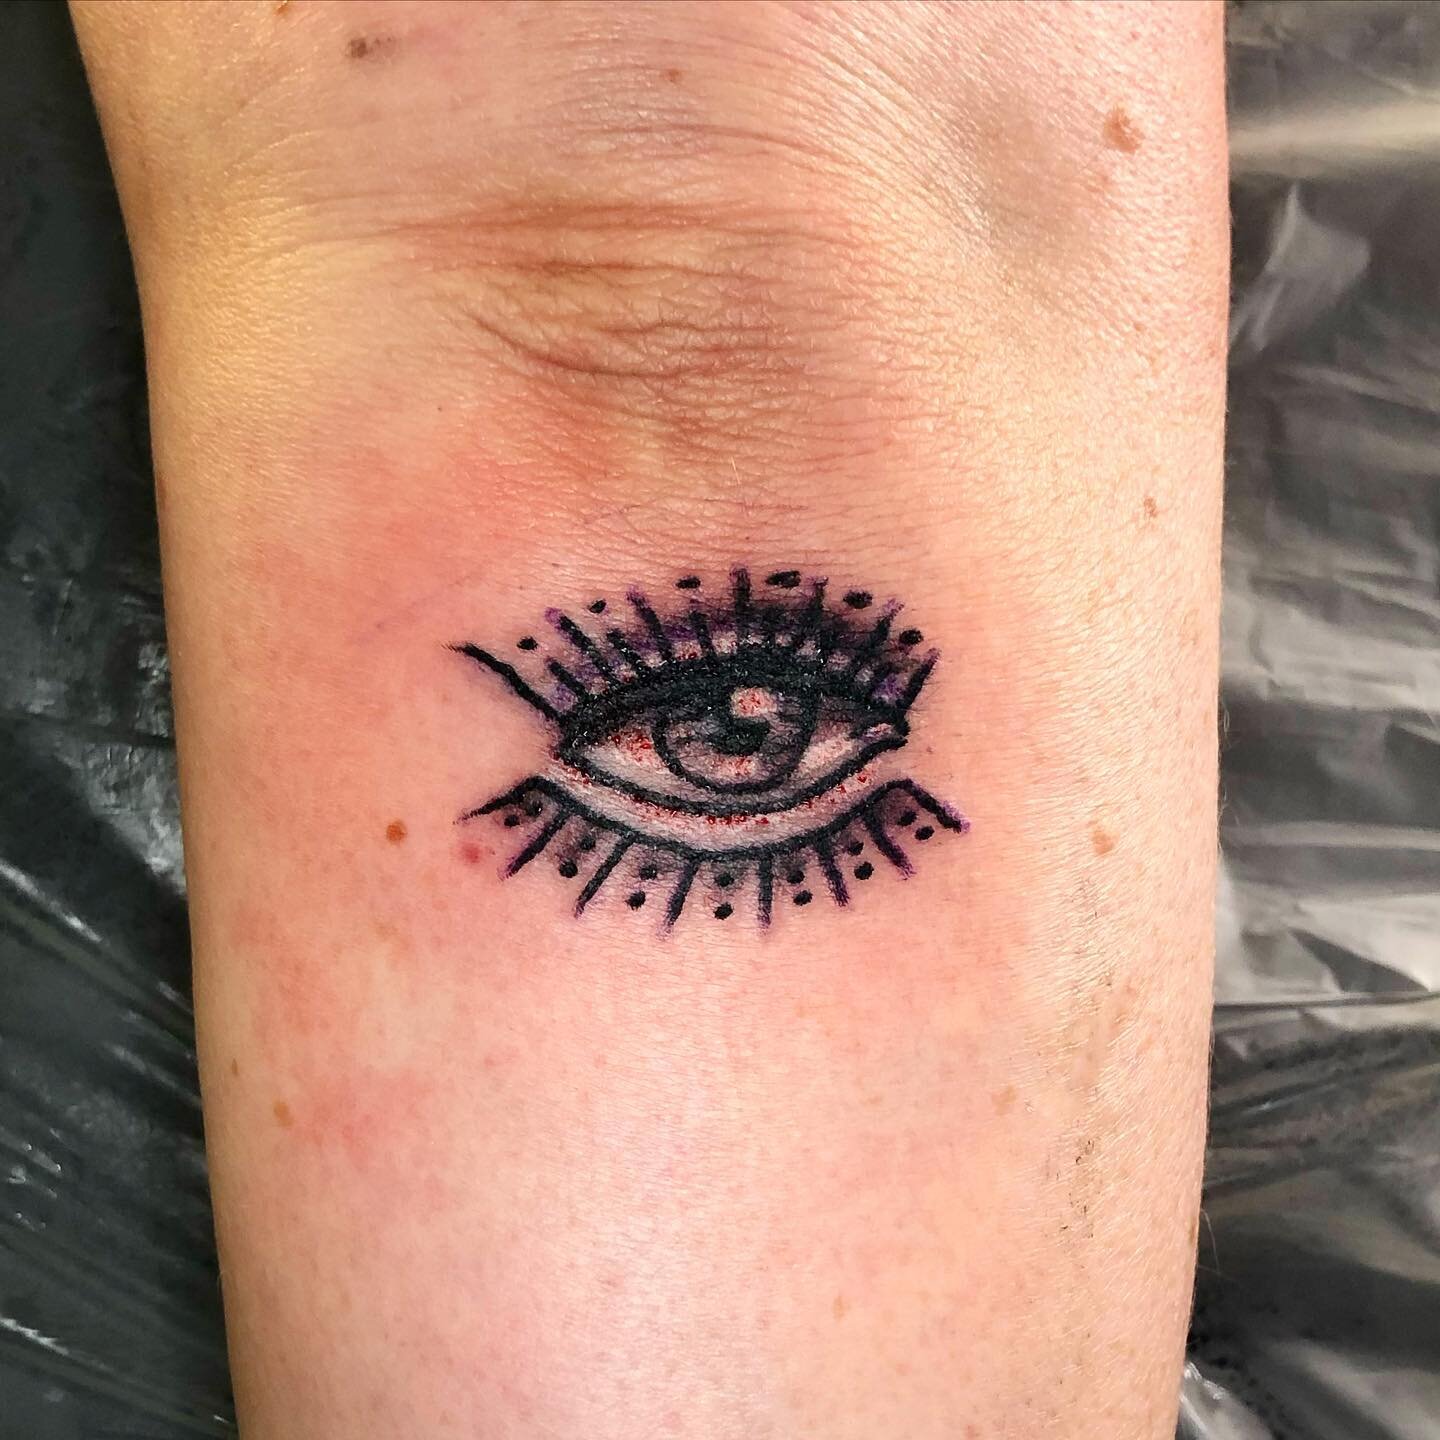 Thanks for eyeballing me! #tattooartist #tattoo #tattooshop #tattoos #eye #portlandoregon #portlandtattoo #portlandtattooshop #walkins #victoriabc